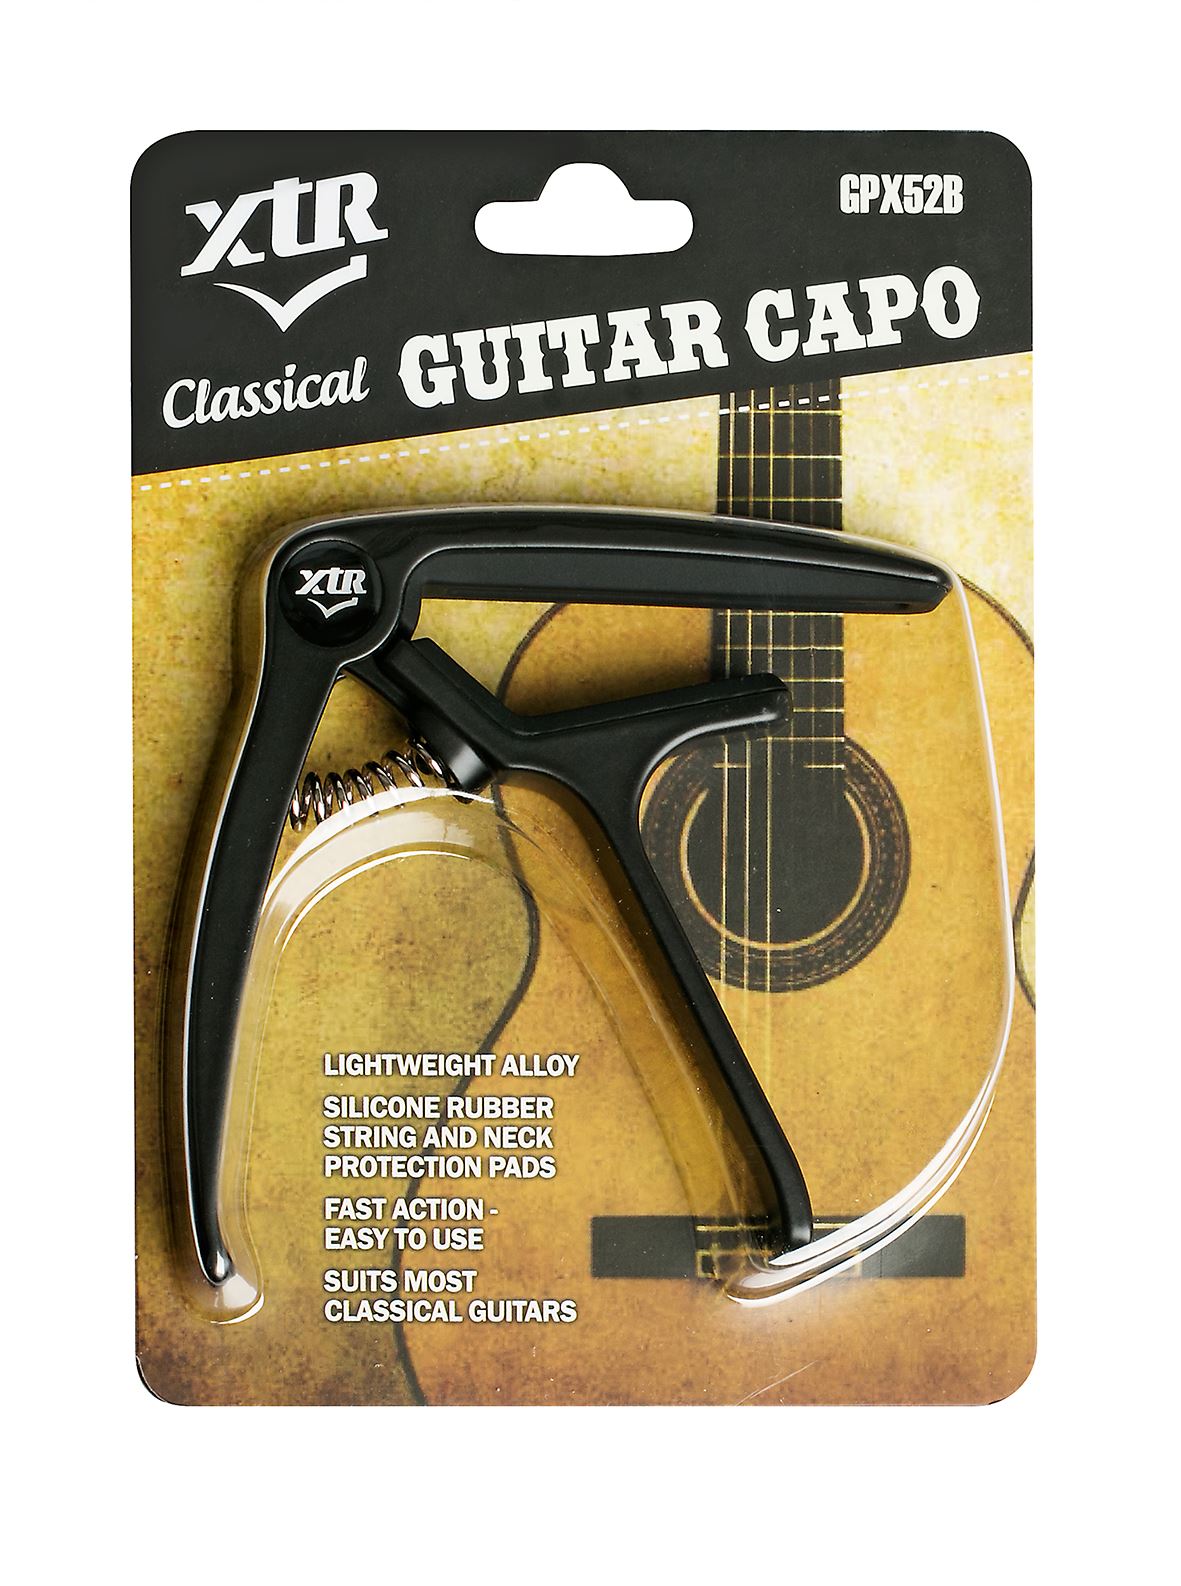 XTR Classical Guitar Capo Guitar Accessories XTR 